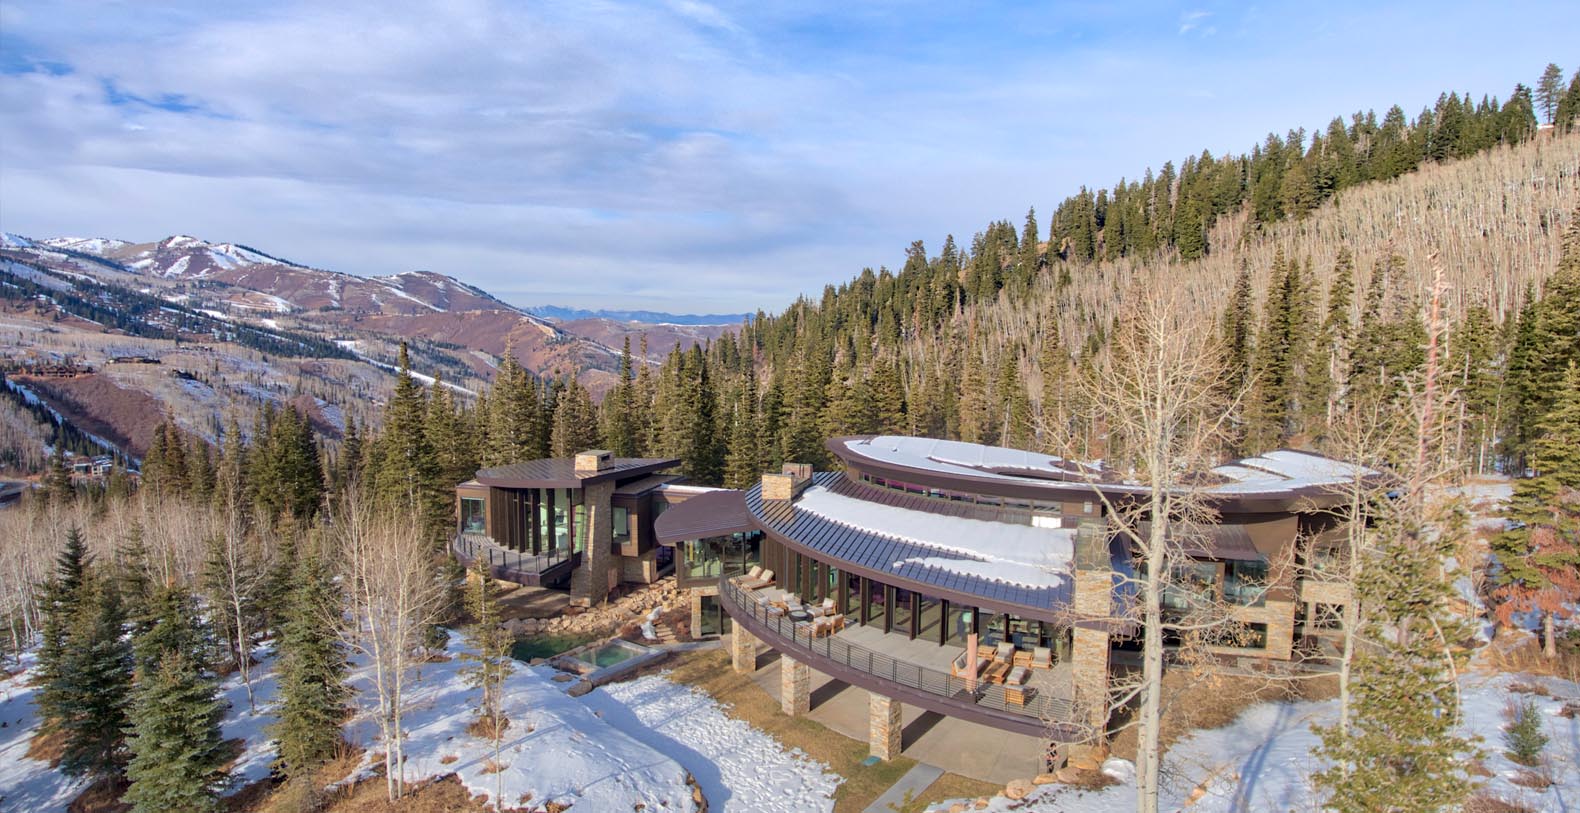 Iron Mountain Chalet Luxury Holiday Rental